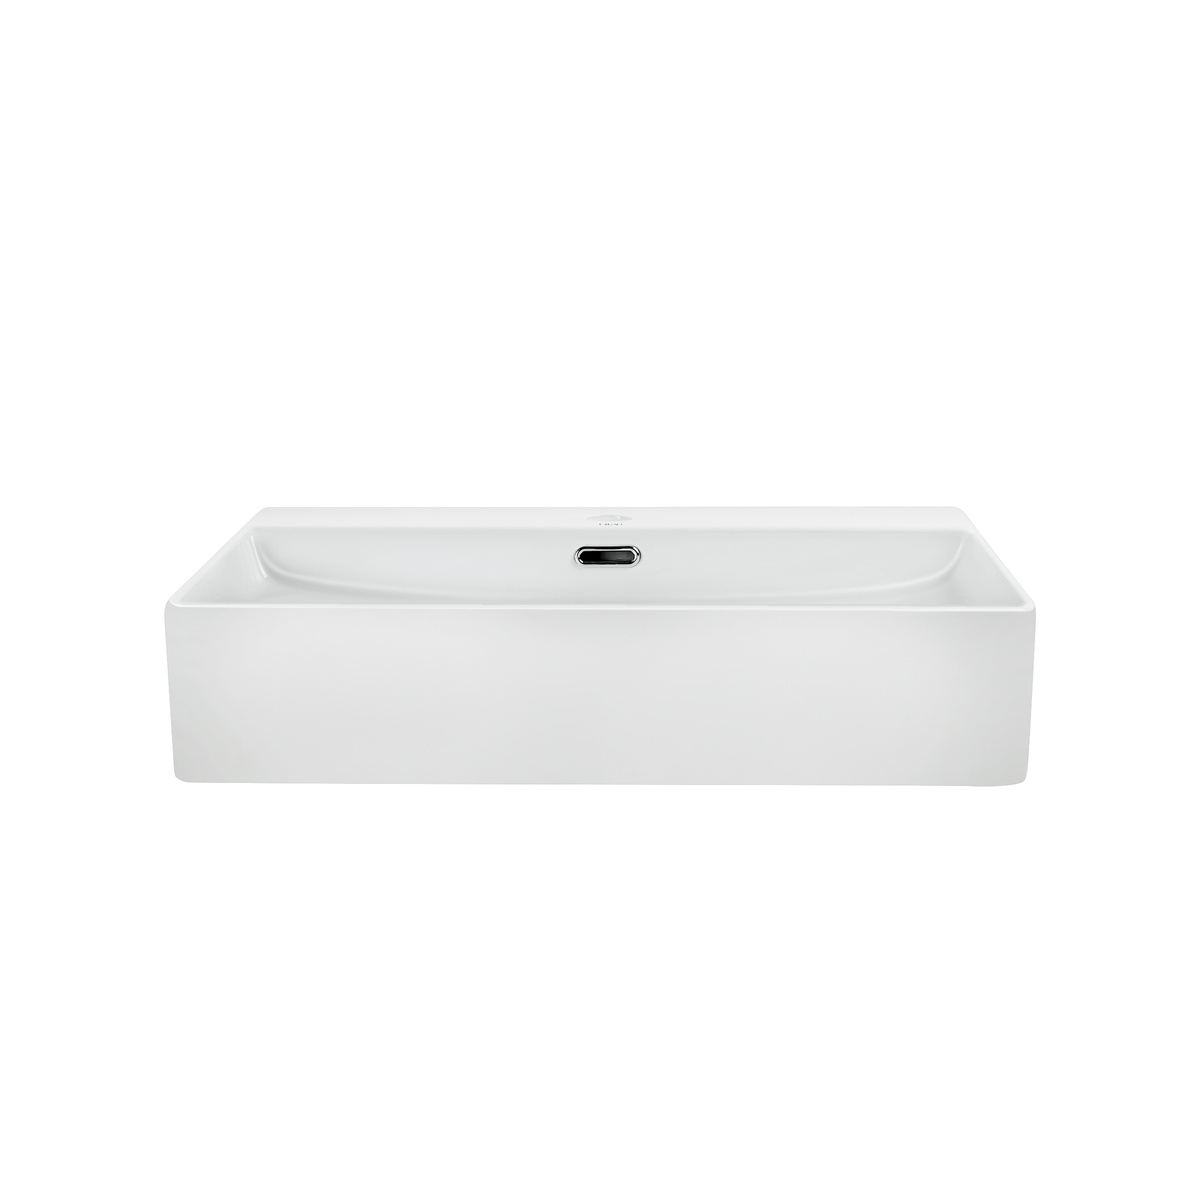 Раковина подвесная в ванную 595мм x 440мм Q-TAP Nando LT белый прямоугольная QT12112173W